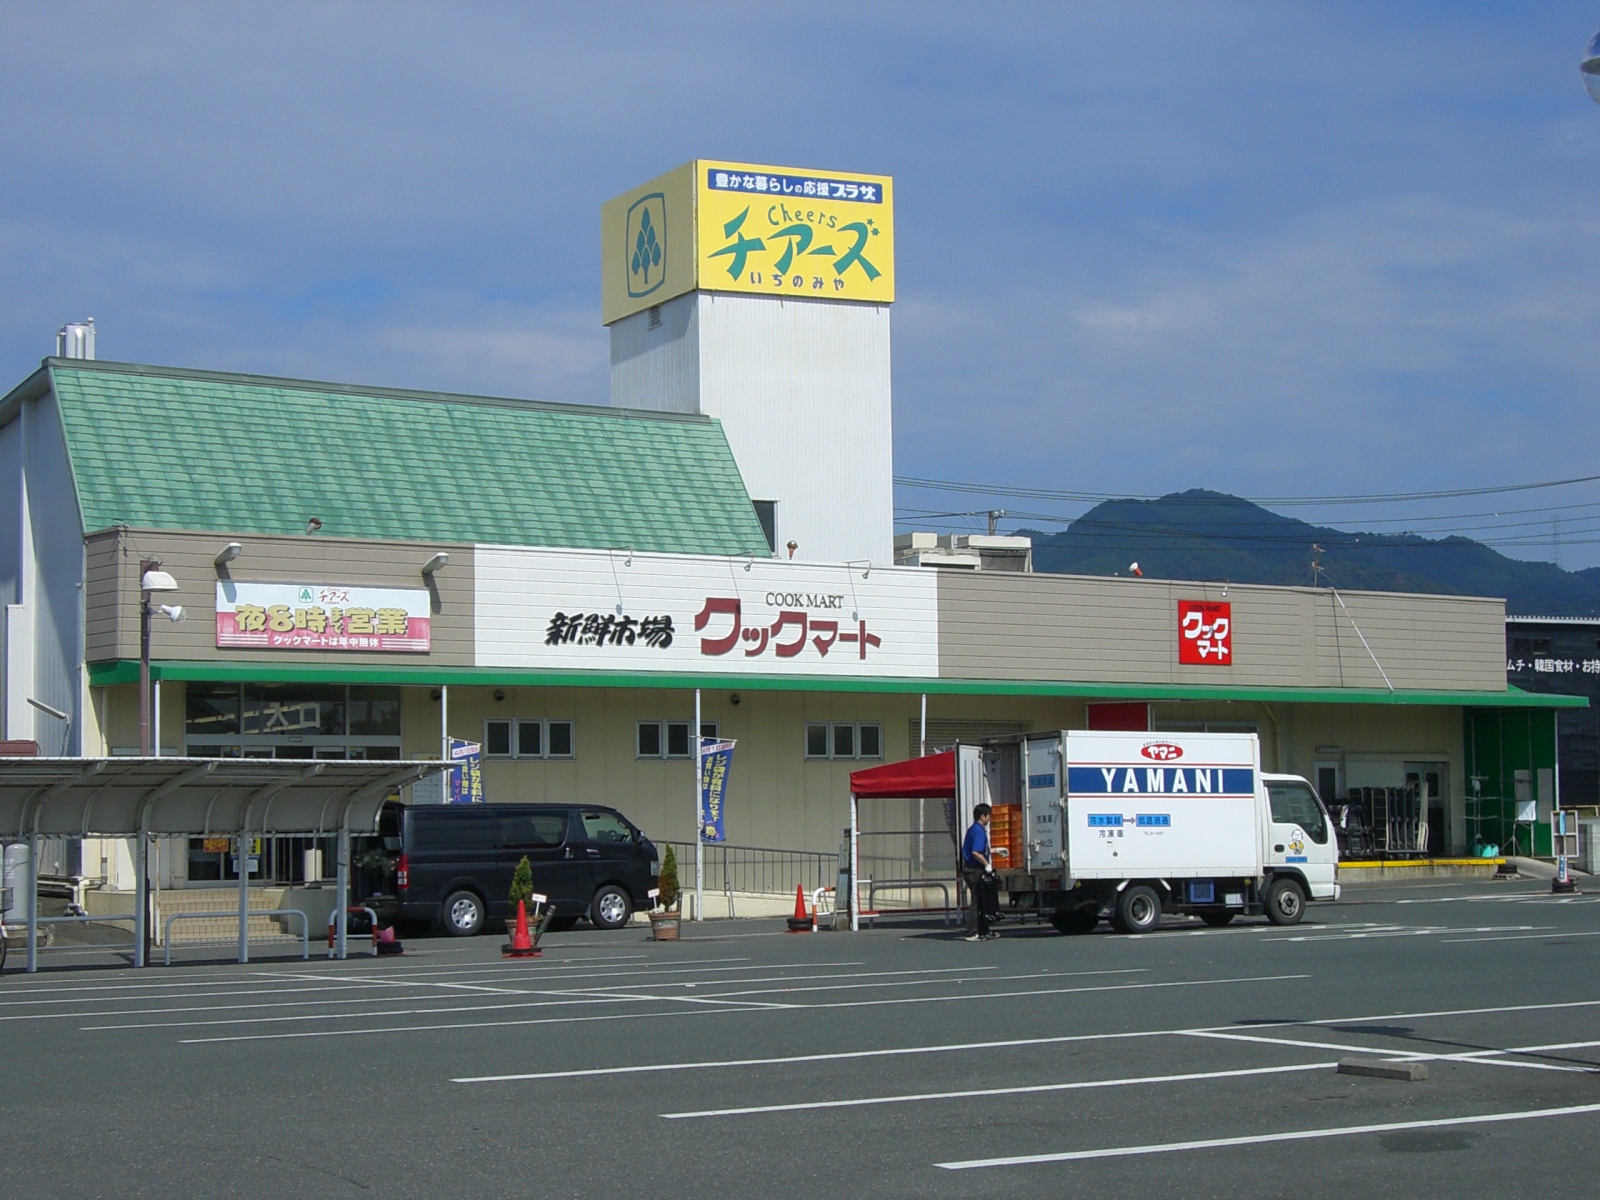 Shopping centre. Cheers Ichinomiya until the (shopping center) 2275m